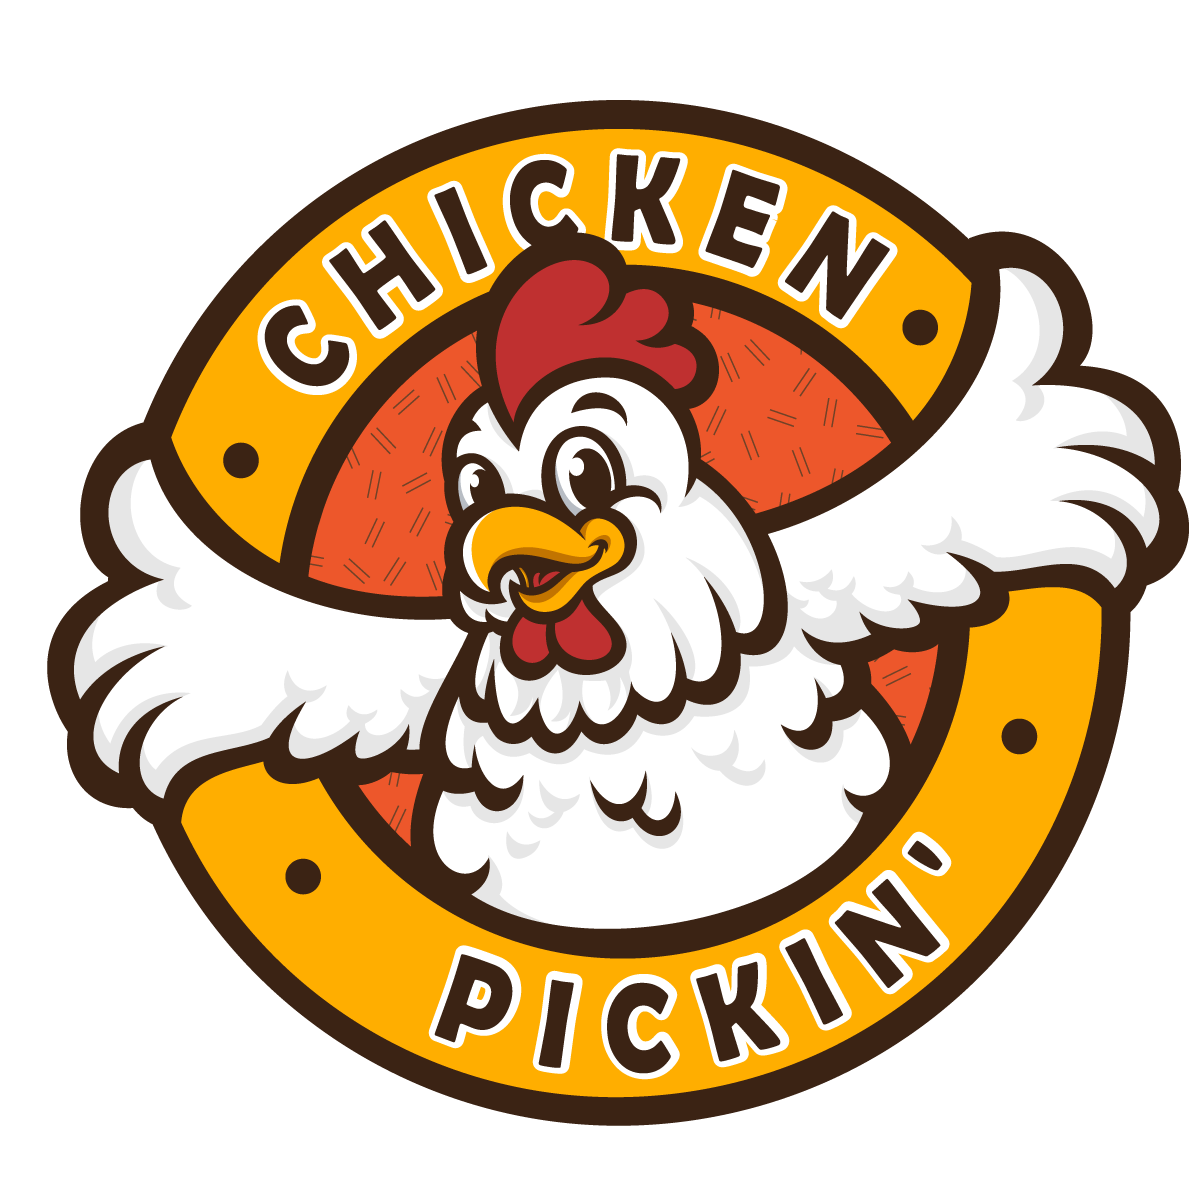 Chicken Pickin' Dinner & Fundraiser 2020